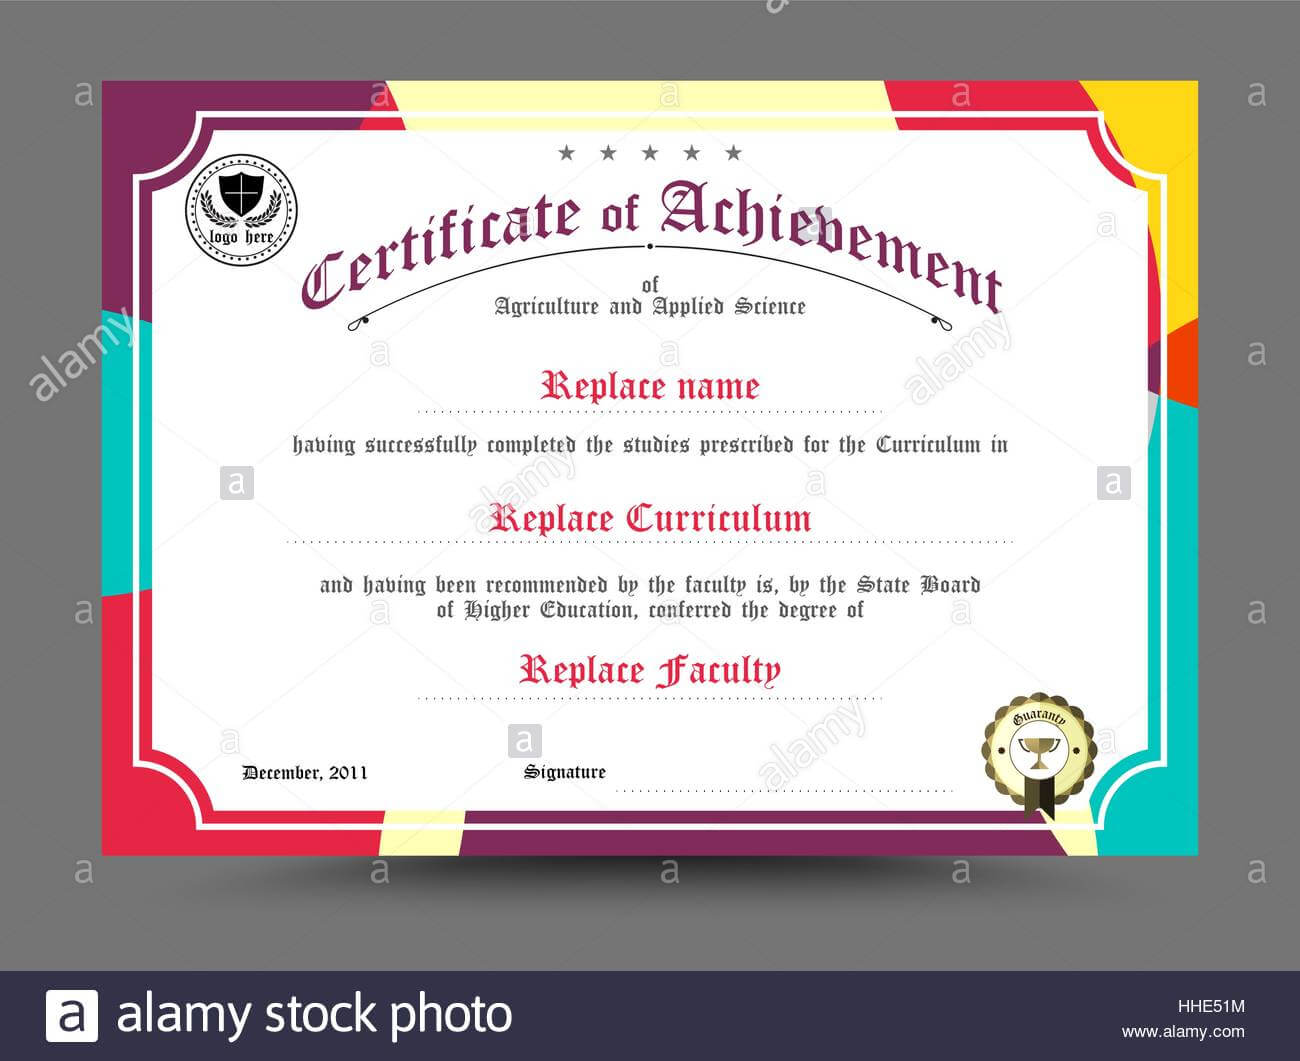 Diploma Certificate Template Design. Vector Illustration In Design A Certificate Template